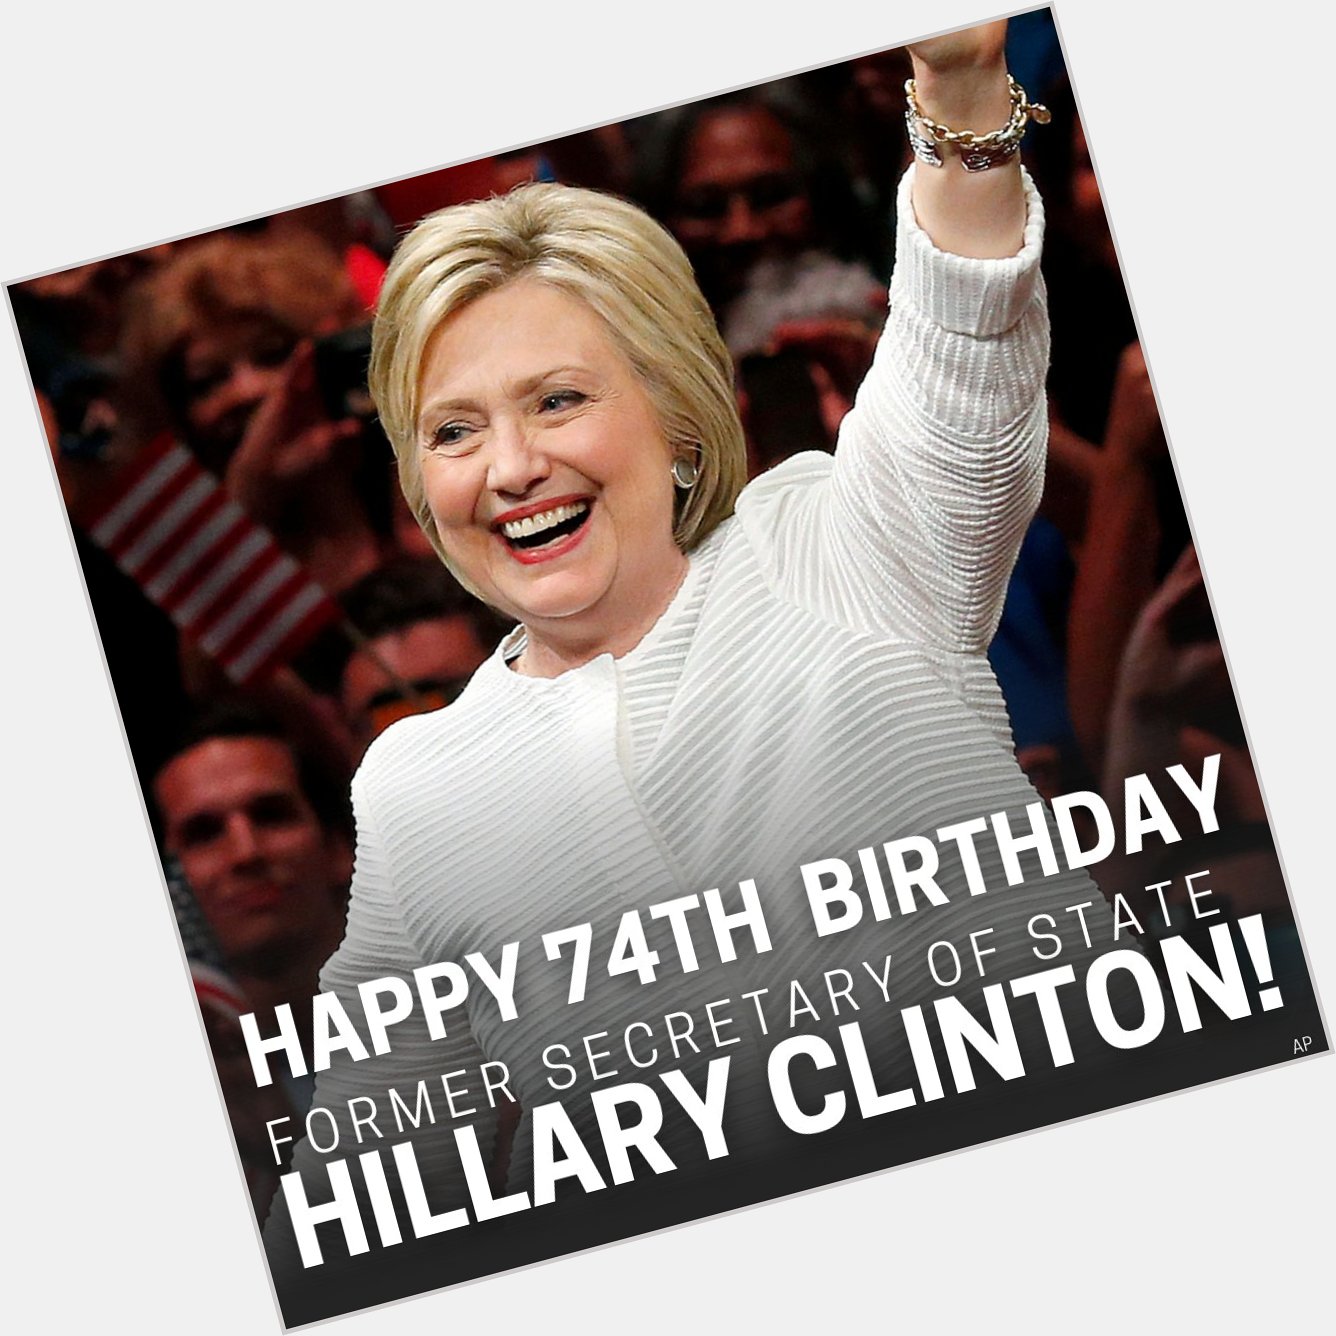  HAPPY BIRTHDAY -- Today is Hillary Clinton\s 74th Birthday 